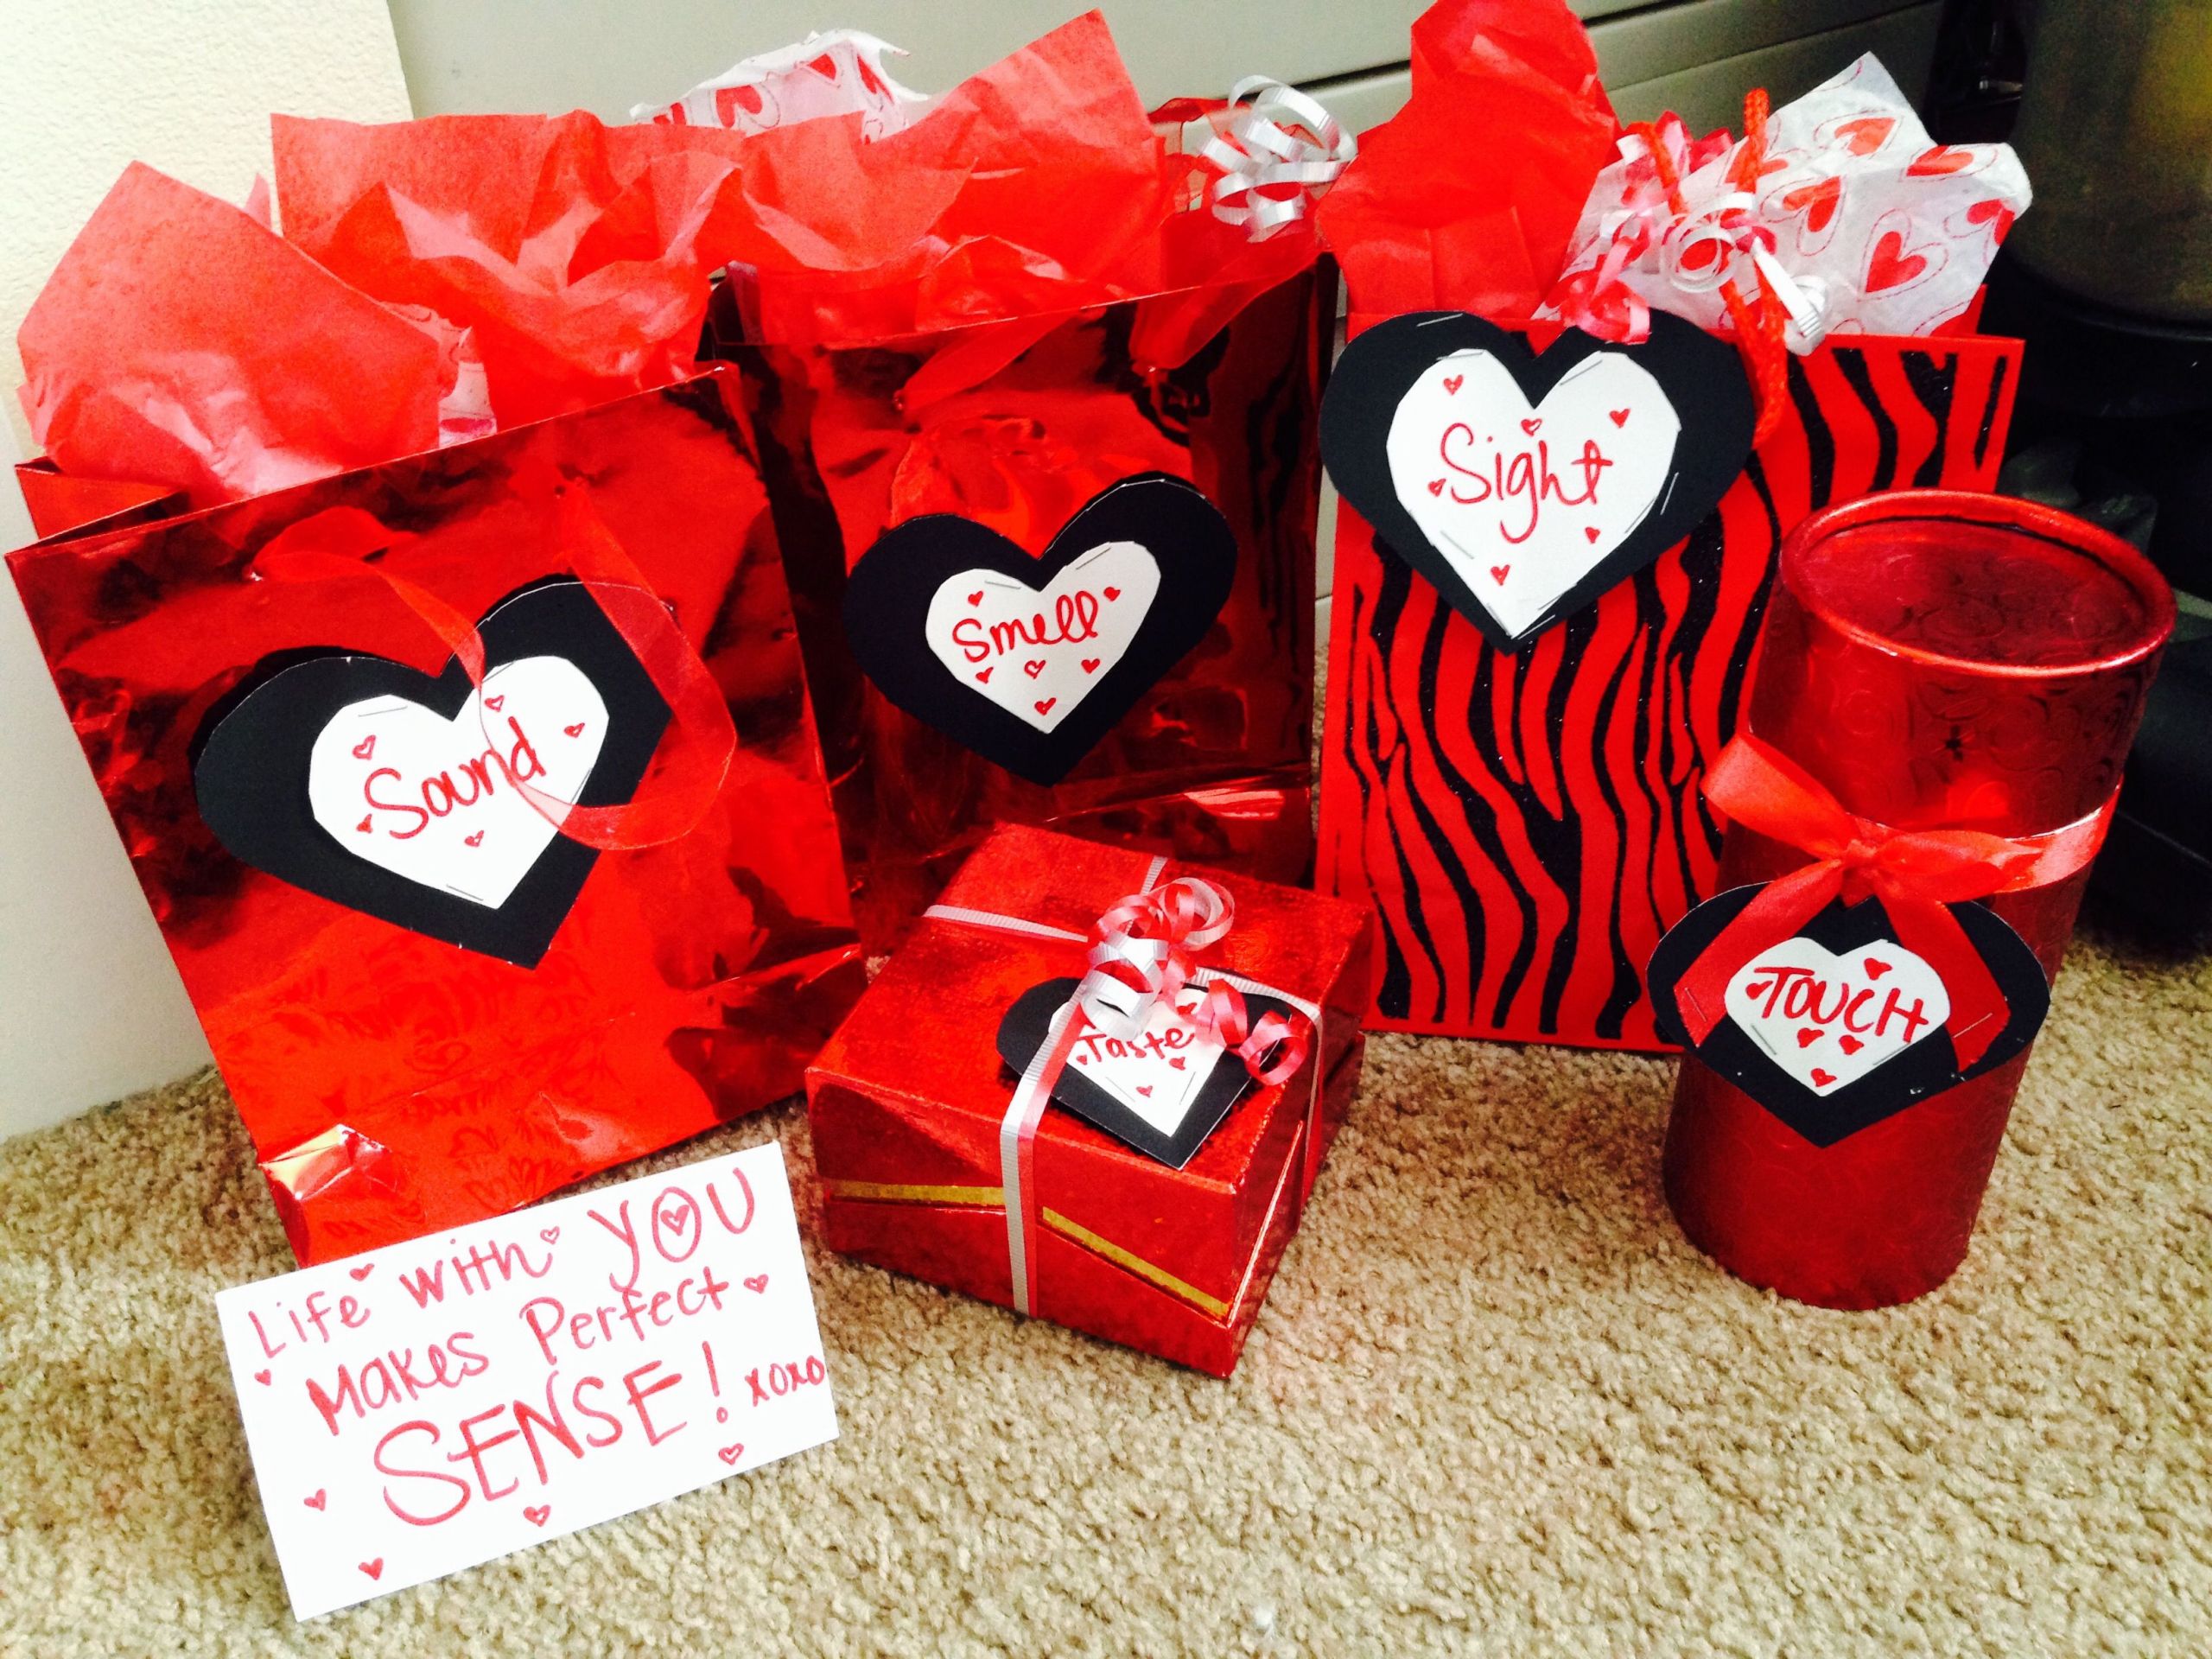 Valentine Day Gift Ideas For Him Pinterest
 Senses t for him Anniversary Valentine s Day